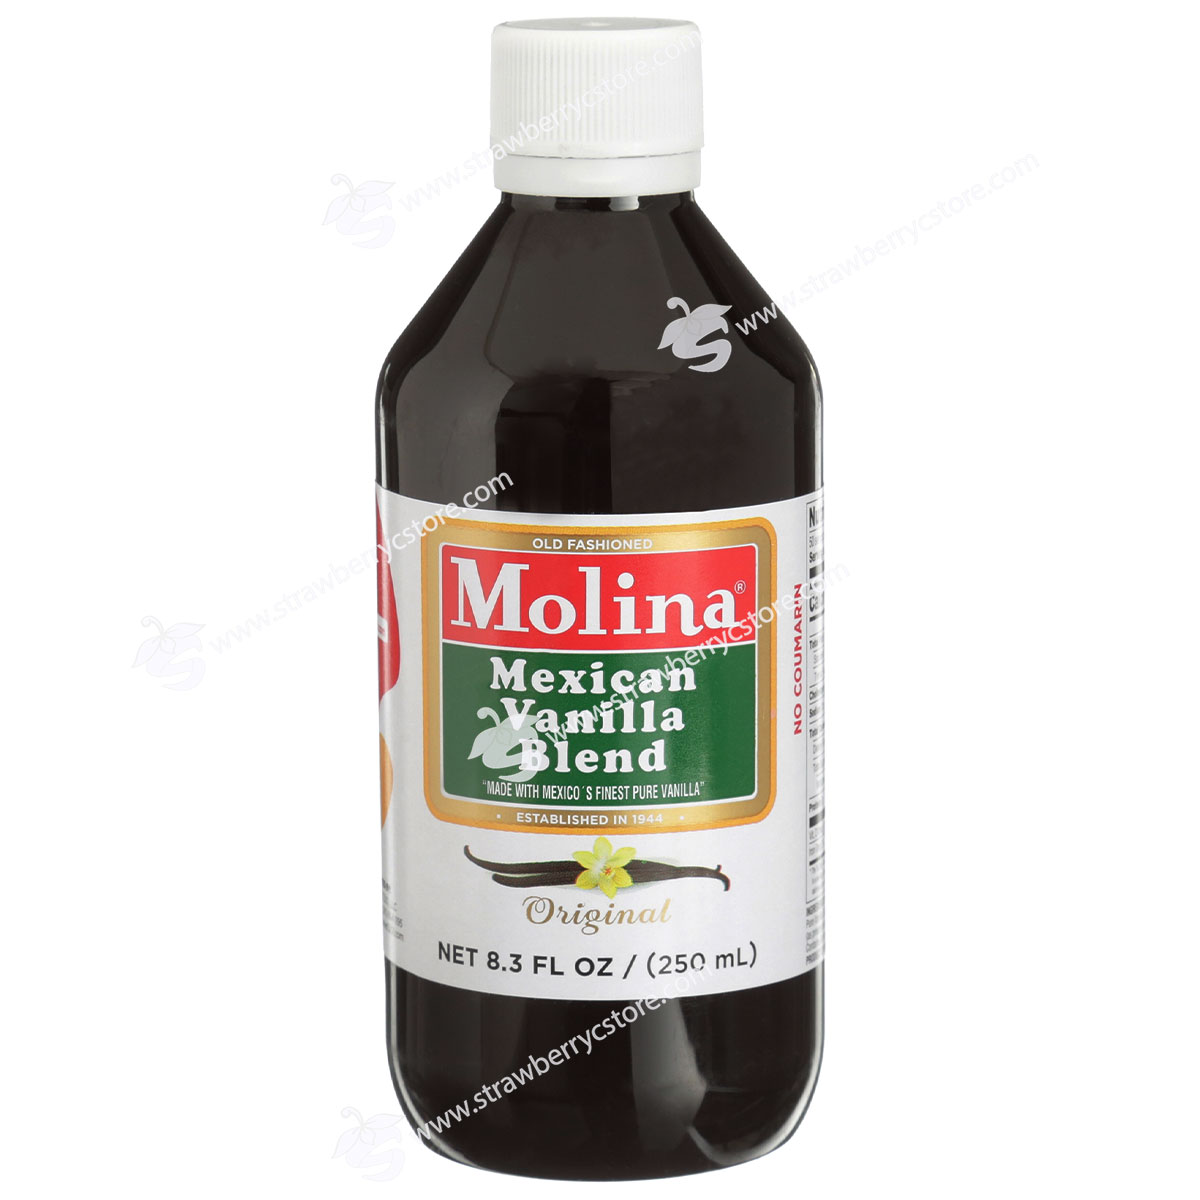 Chiết Xuất Vani Molina Mexican Vanilla Blend, Original, Chai 250 mL 8.3